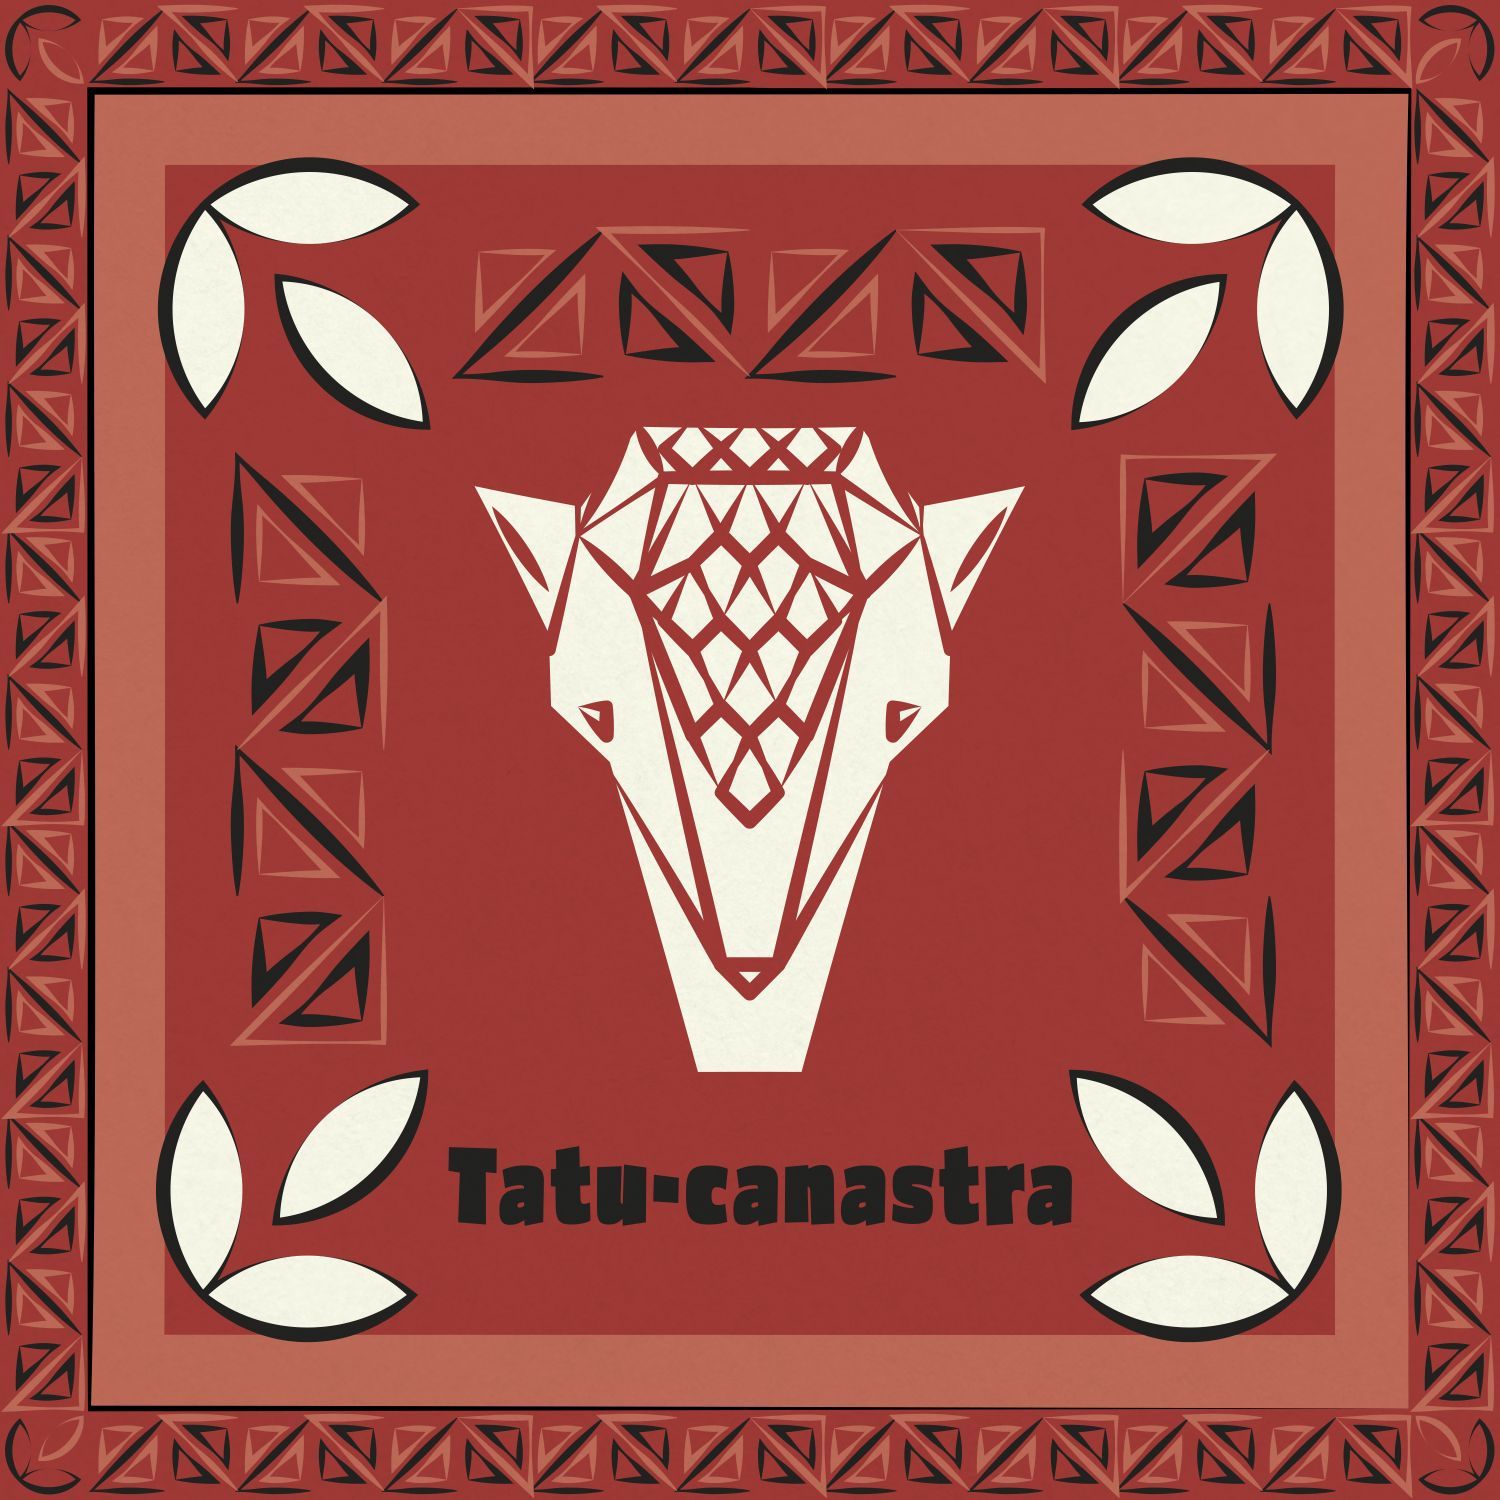 Tatu-canastra (Giant armadillos)